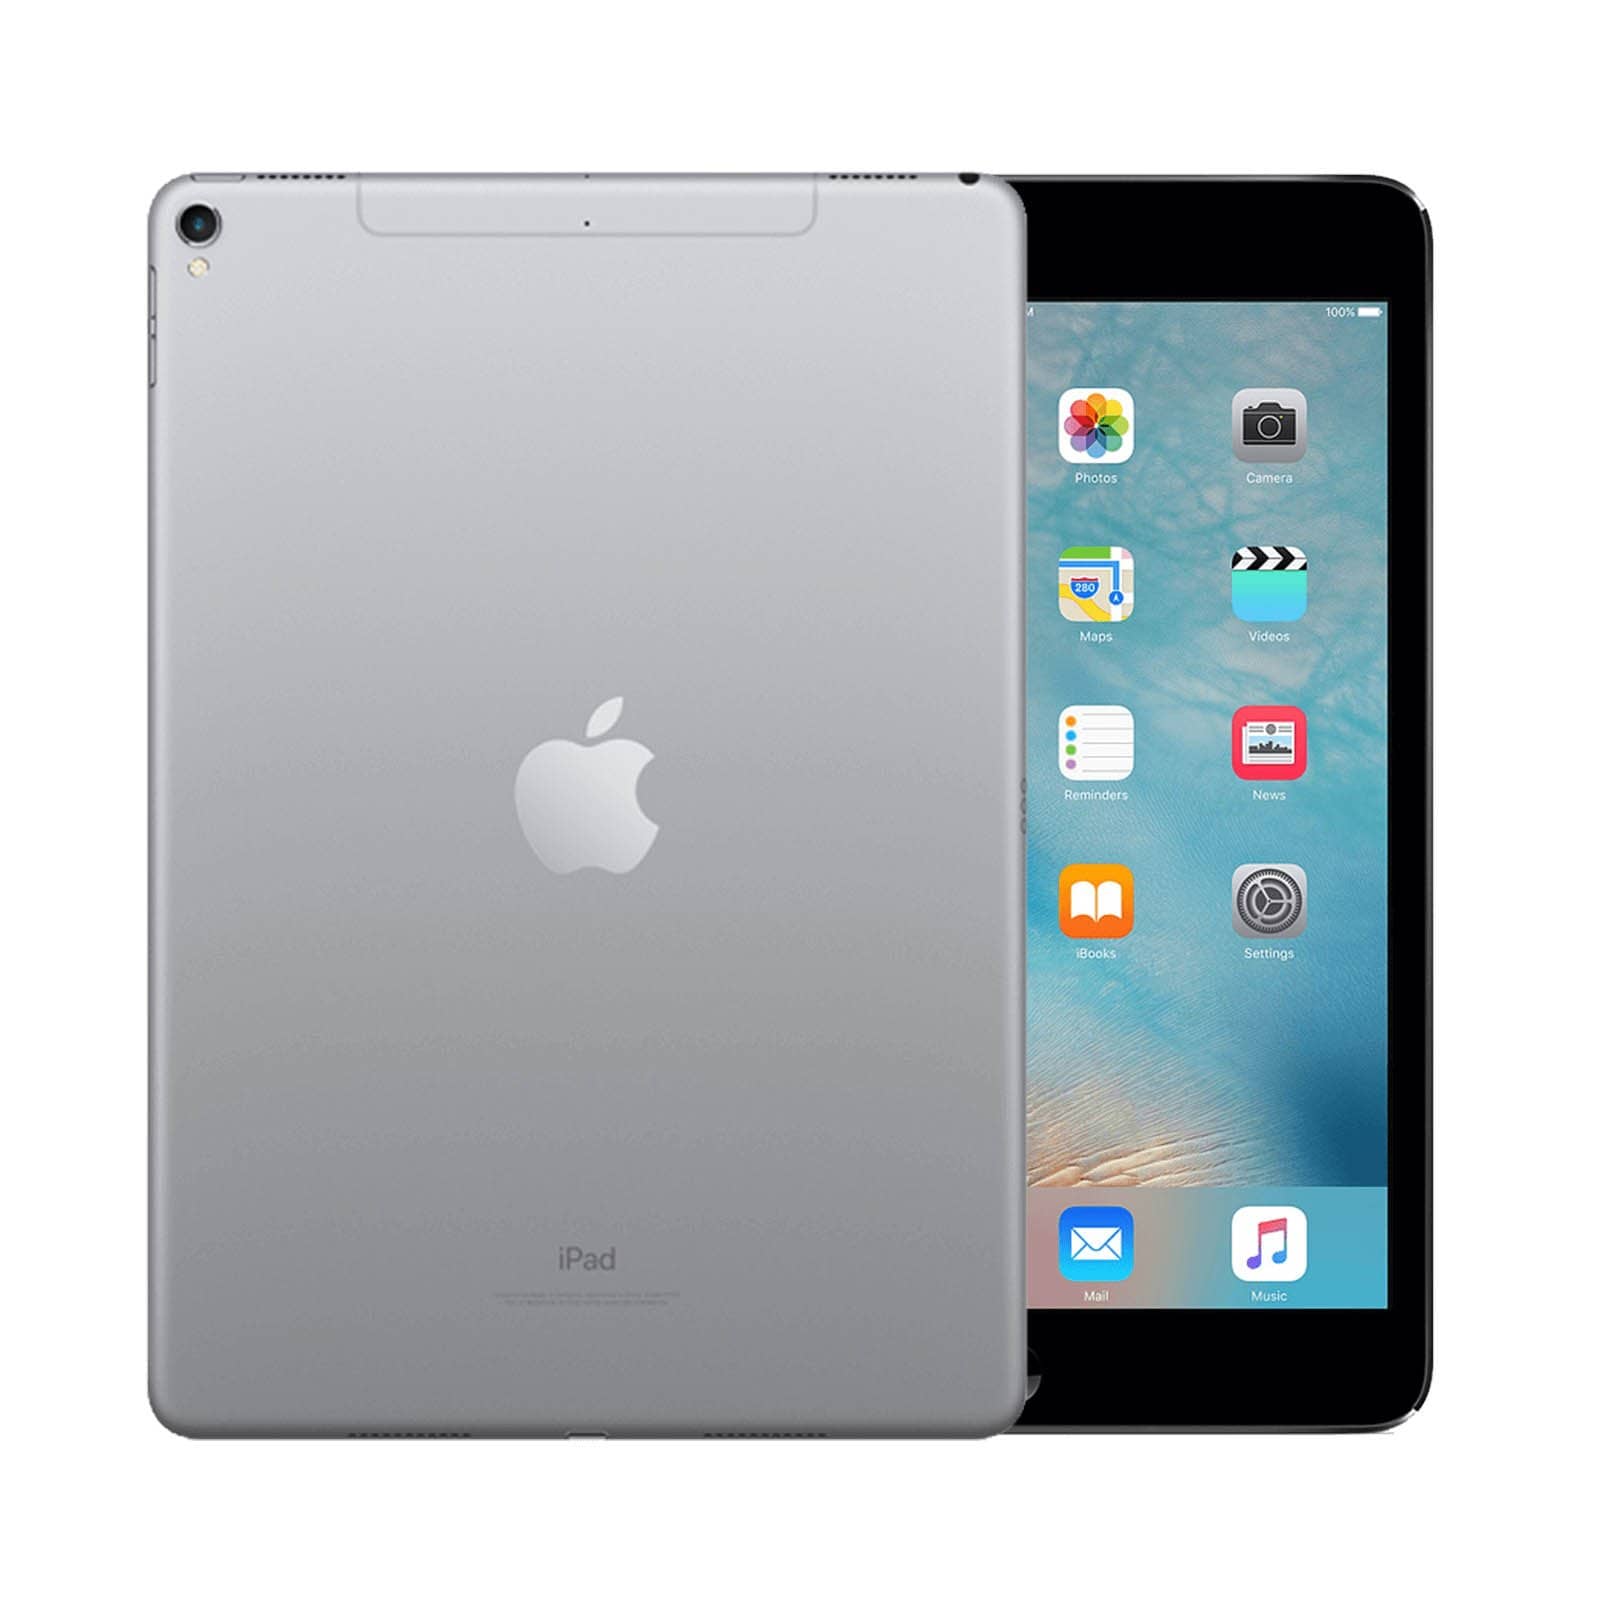 iPad Pro 9.7 Inch 256GB Space Grey Very Good - Unlocked 256GB Space Grey Very Good